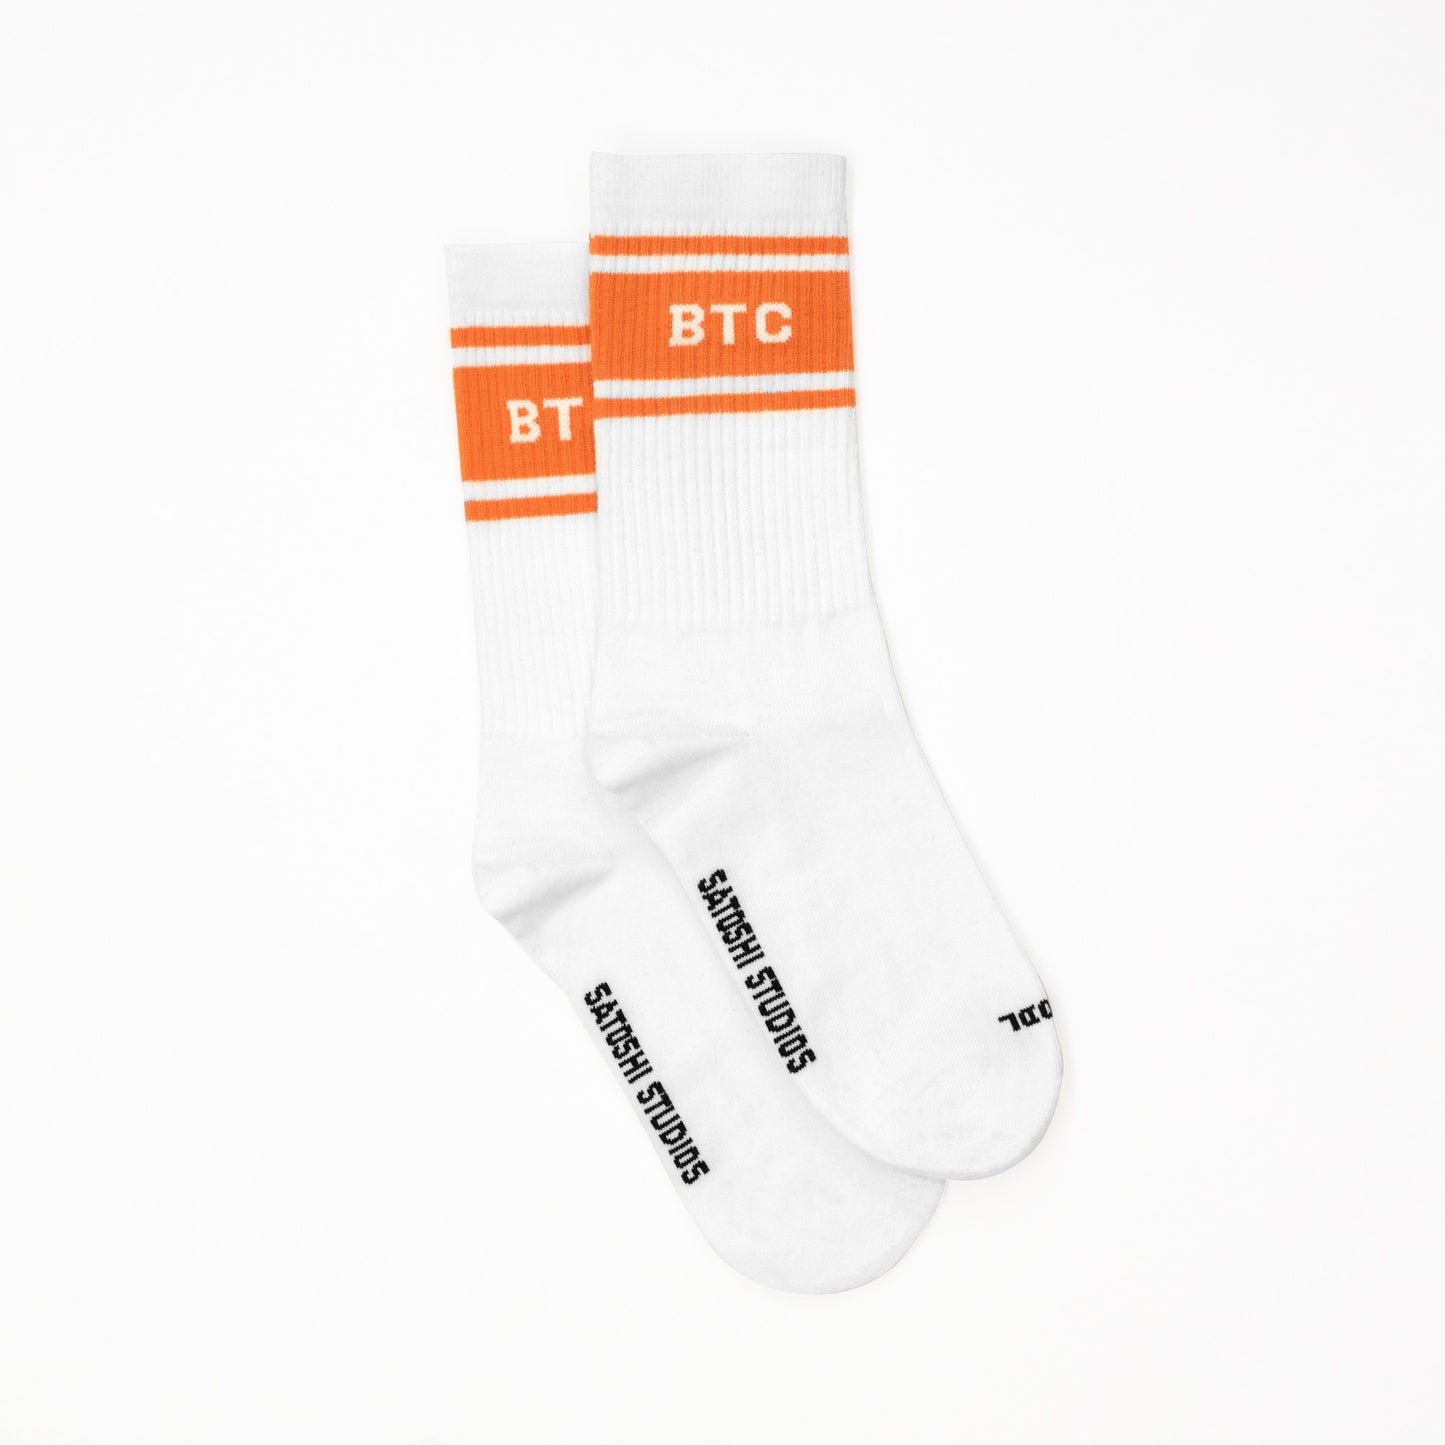 Bitcoin BTC Socks